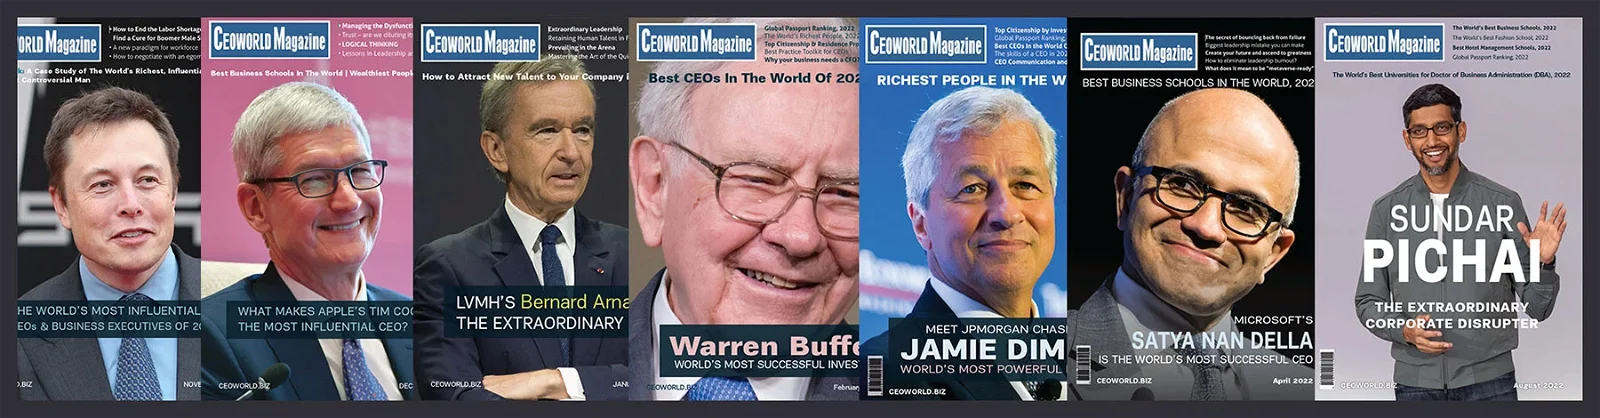 Russian Billionaires: Russia's Top 20 Richest People, 2022 - CEOWORLD  magazine